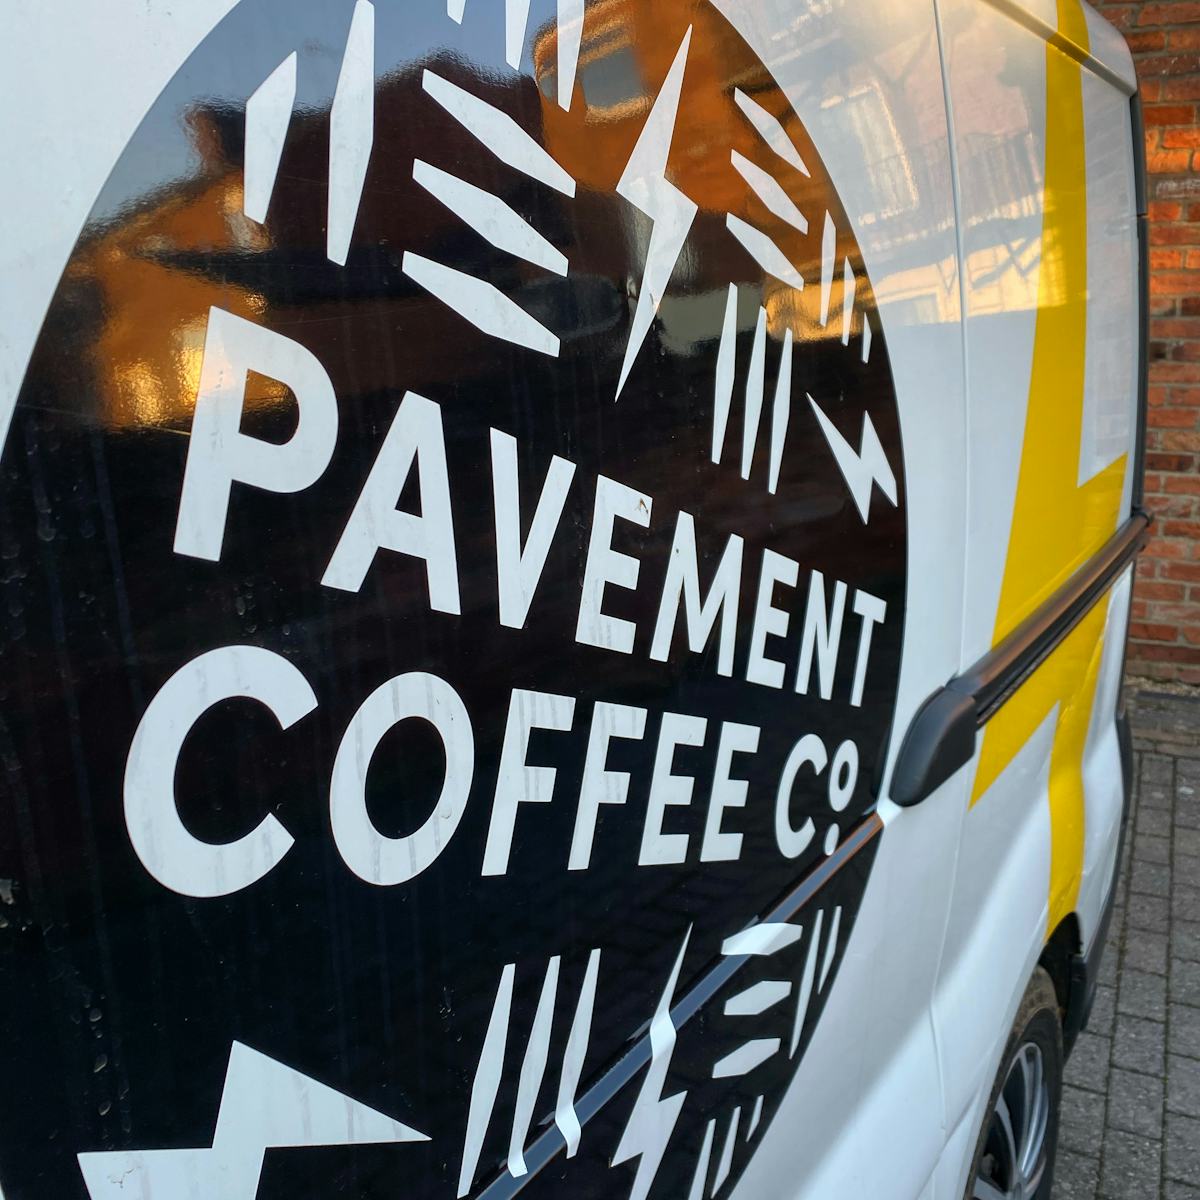 Pavement Coffee Co